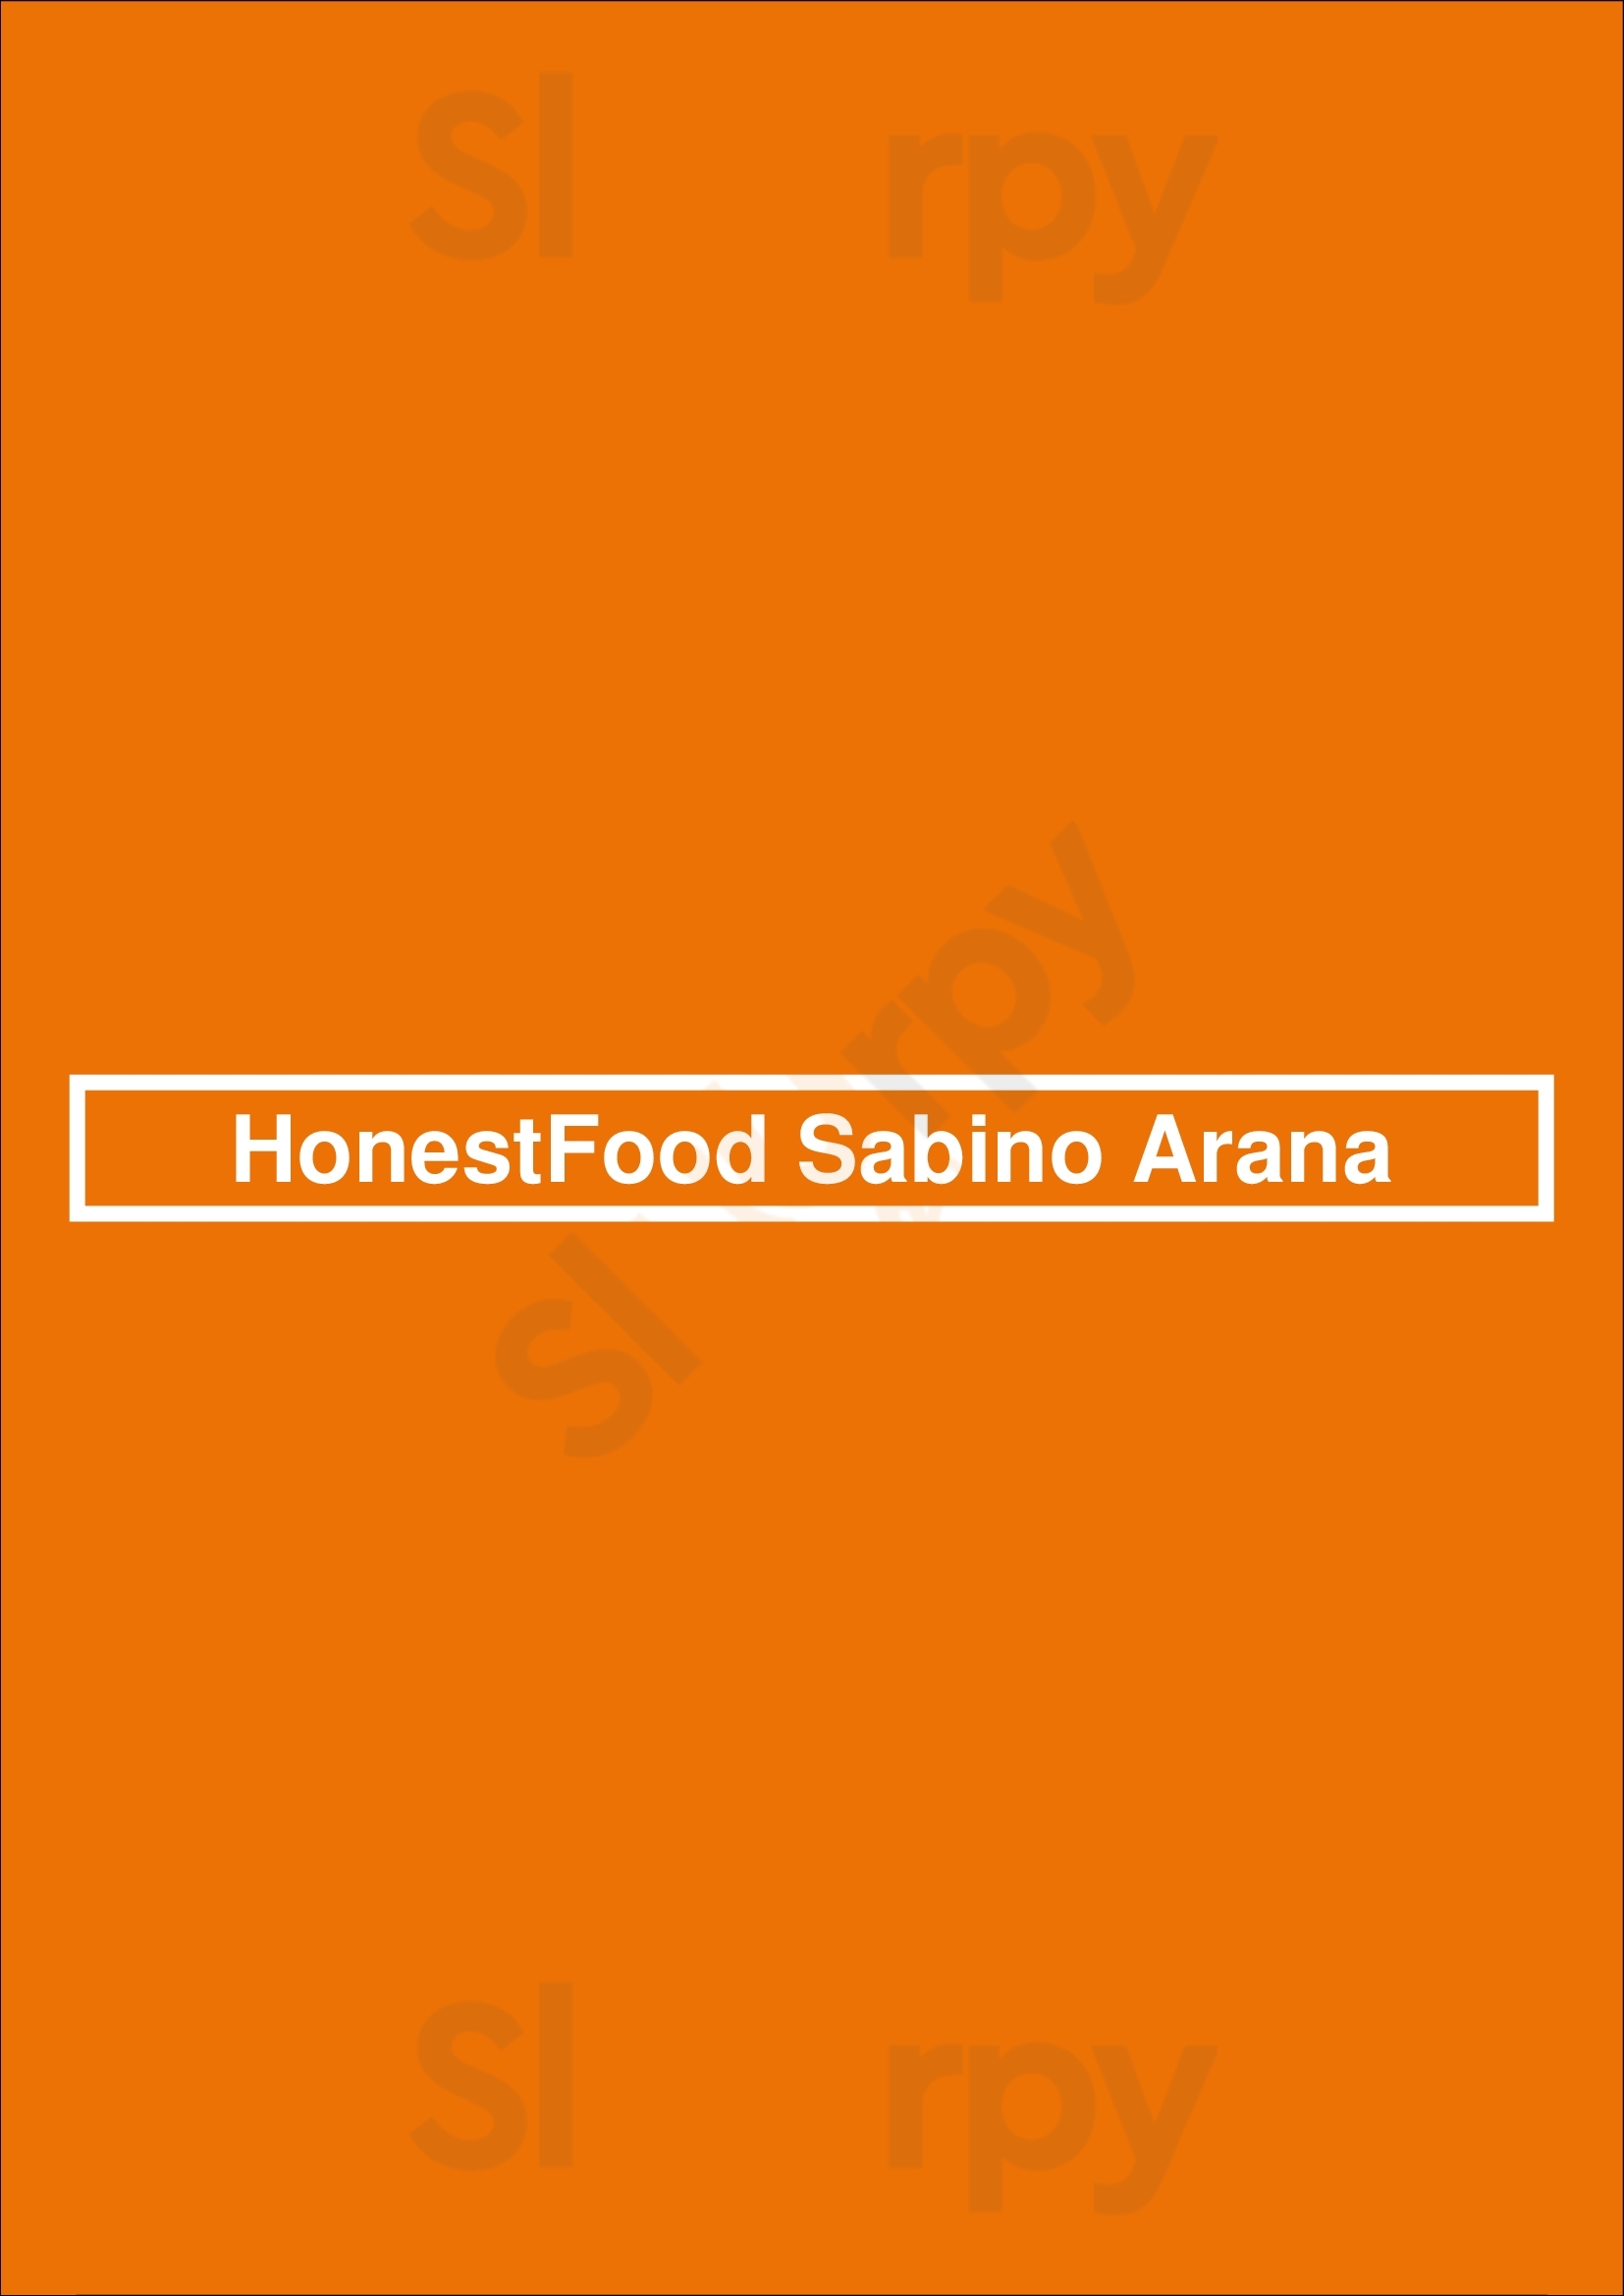 Honestfood Sabino Arana Barcelona Menu - 1